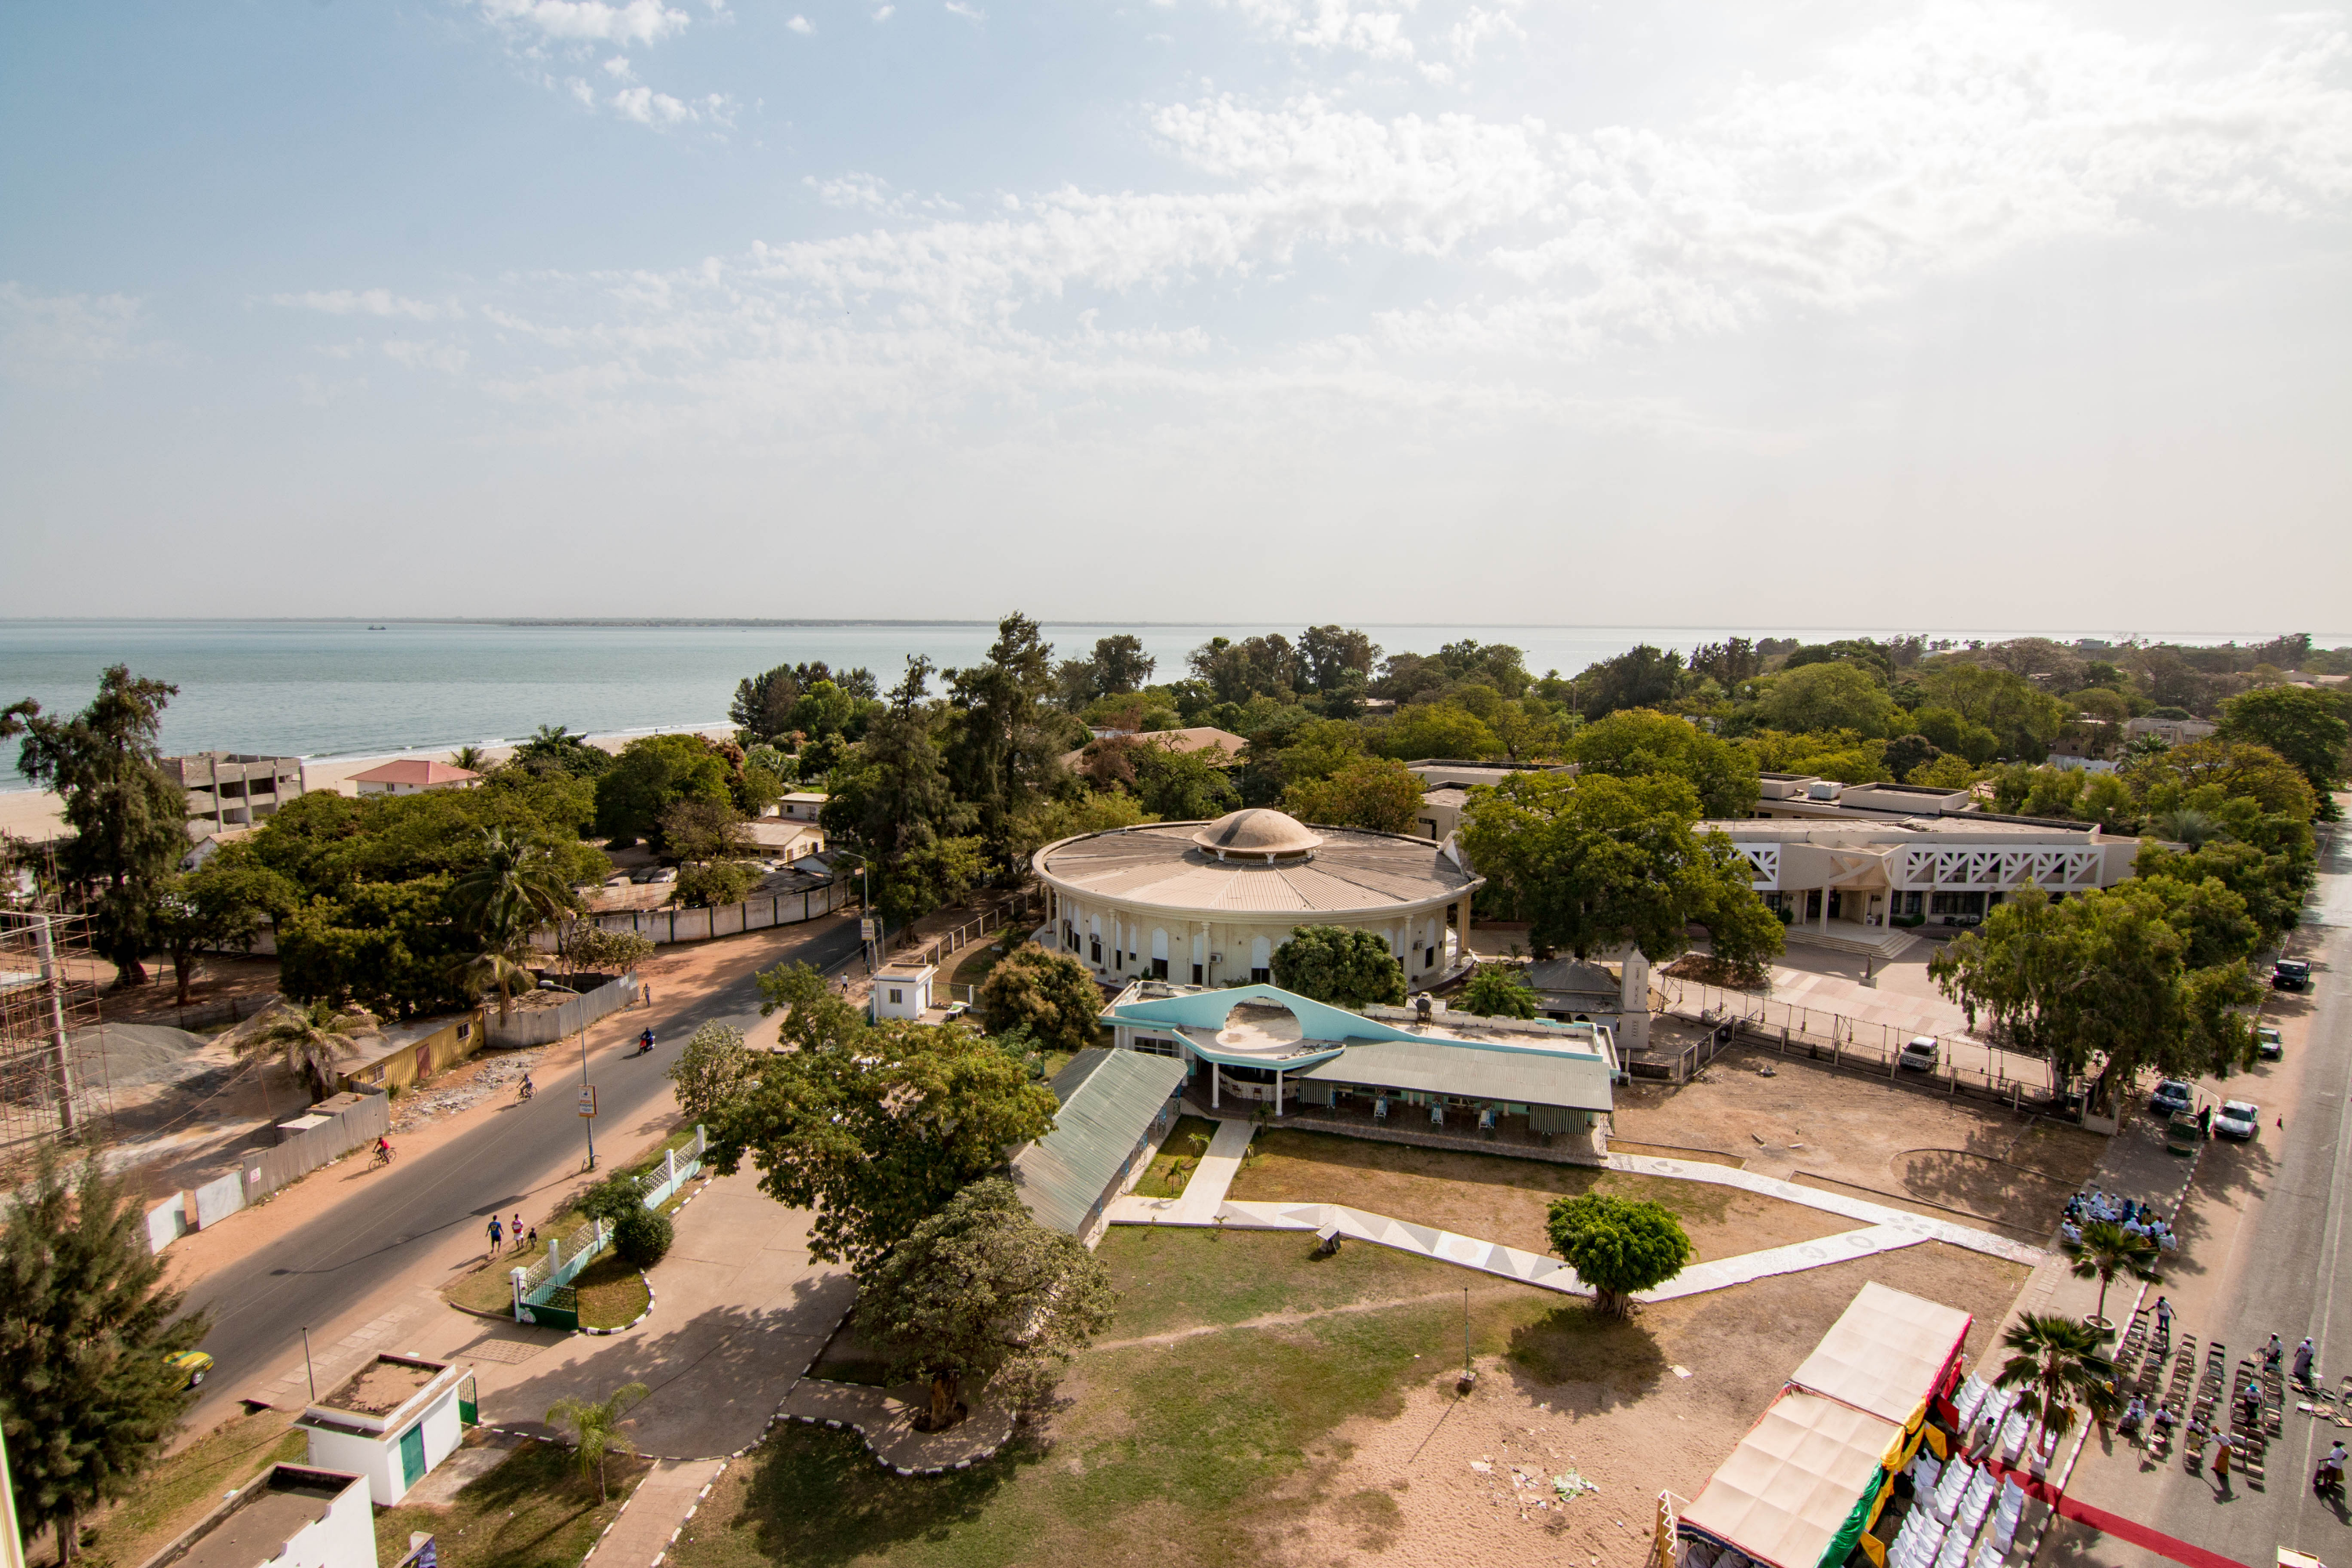 Day 1 Banjul, The Gambia